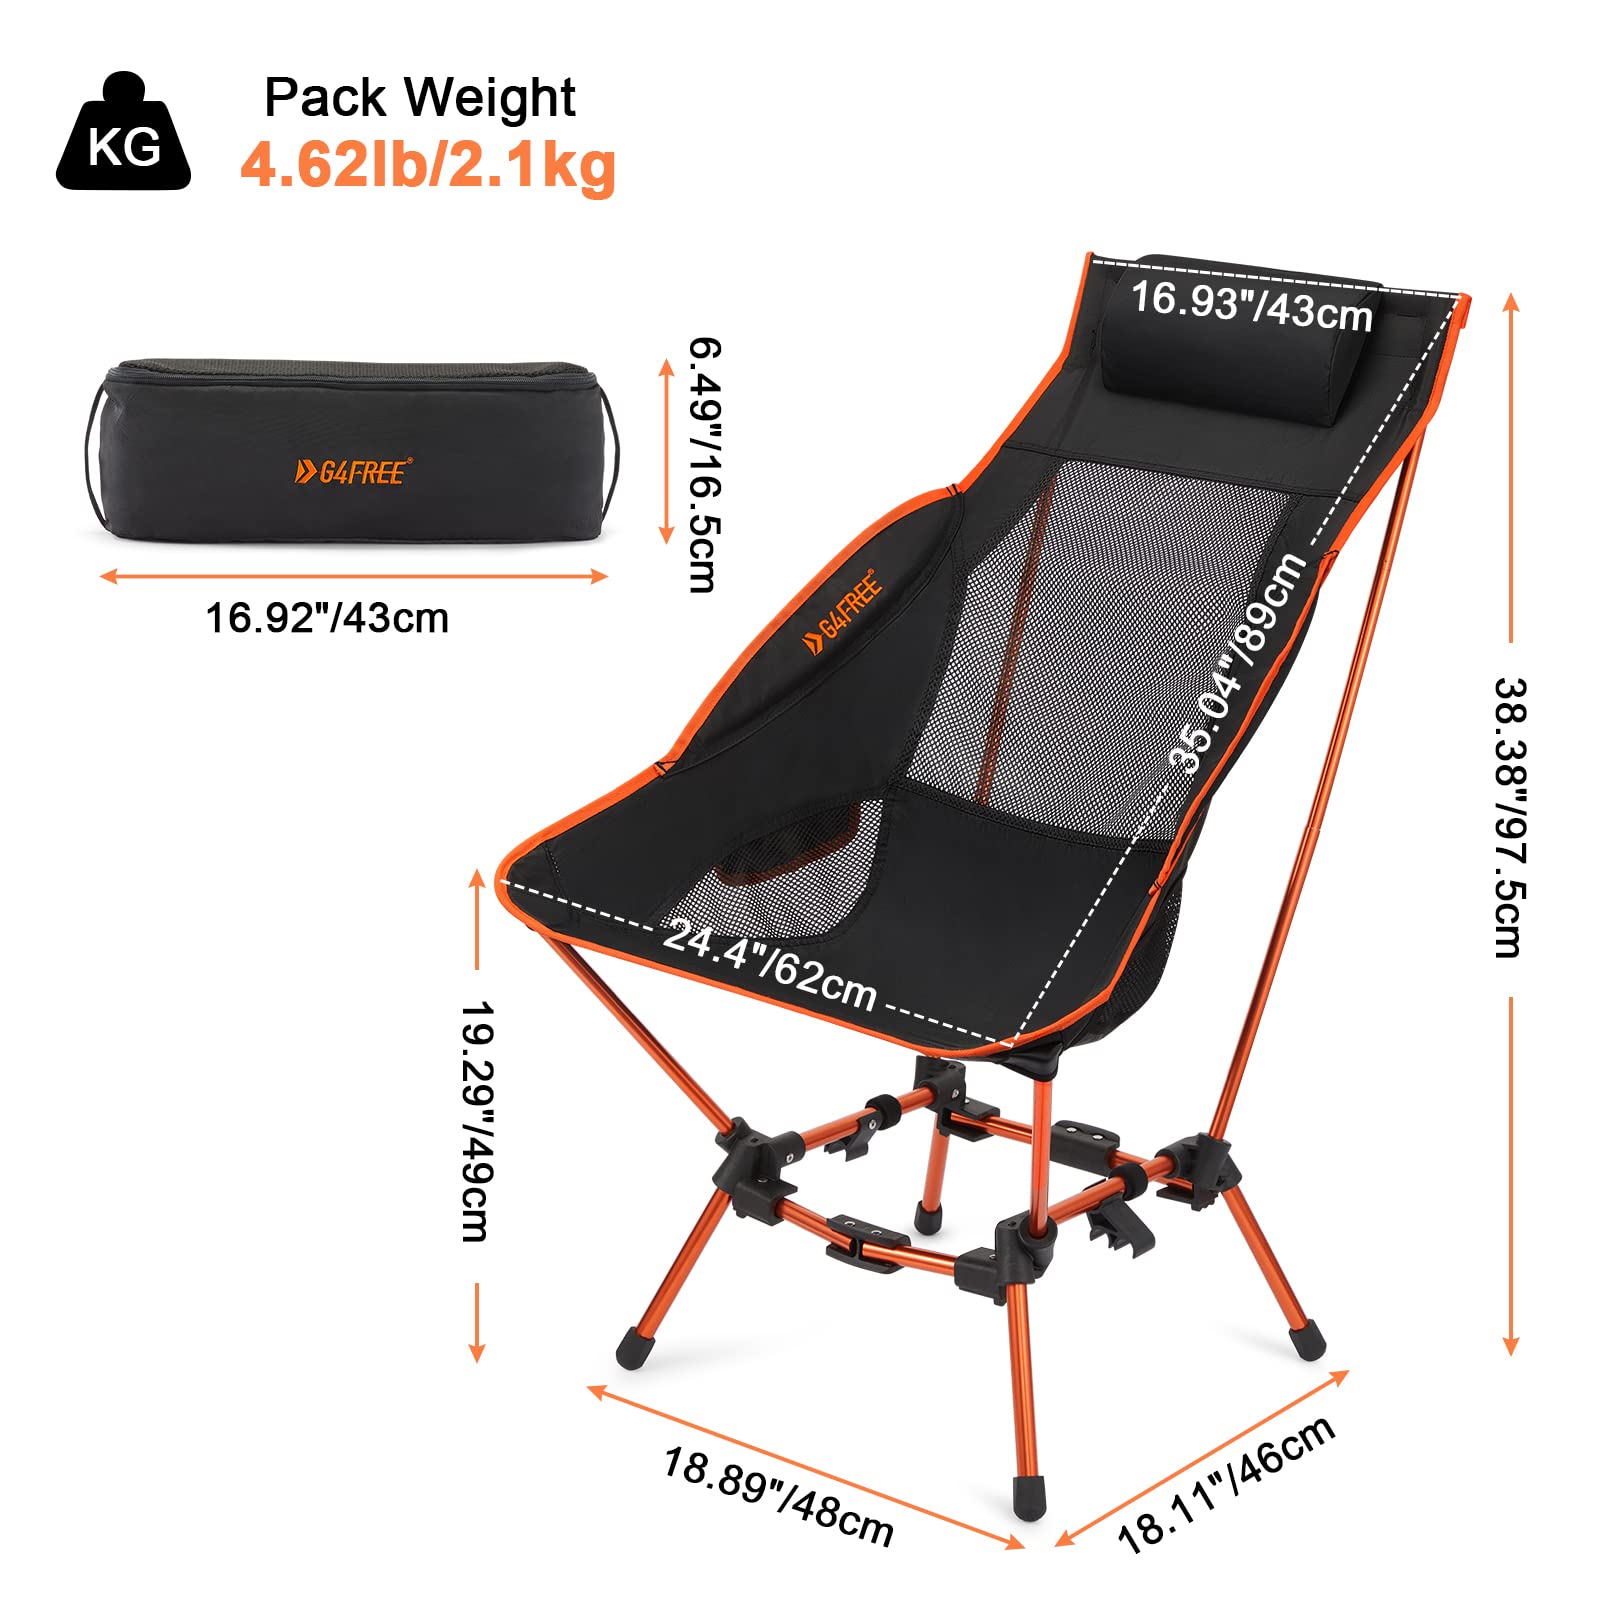  G4Free Folding Camp Chair High Back Lightweight Camping Chair